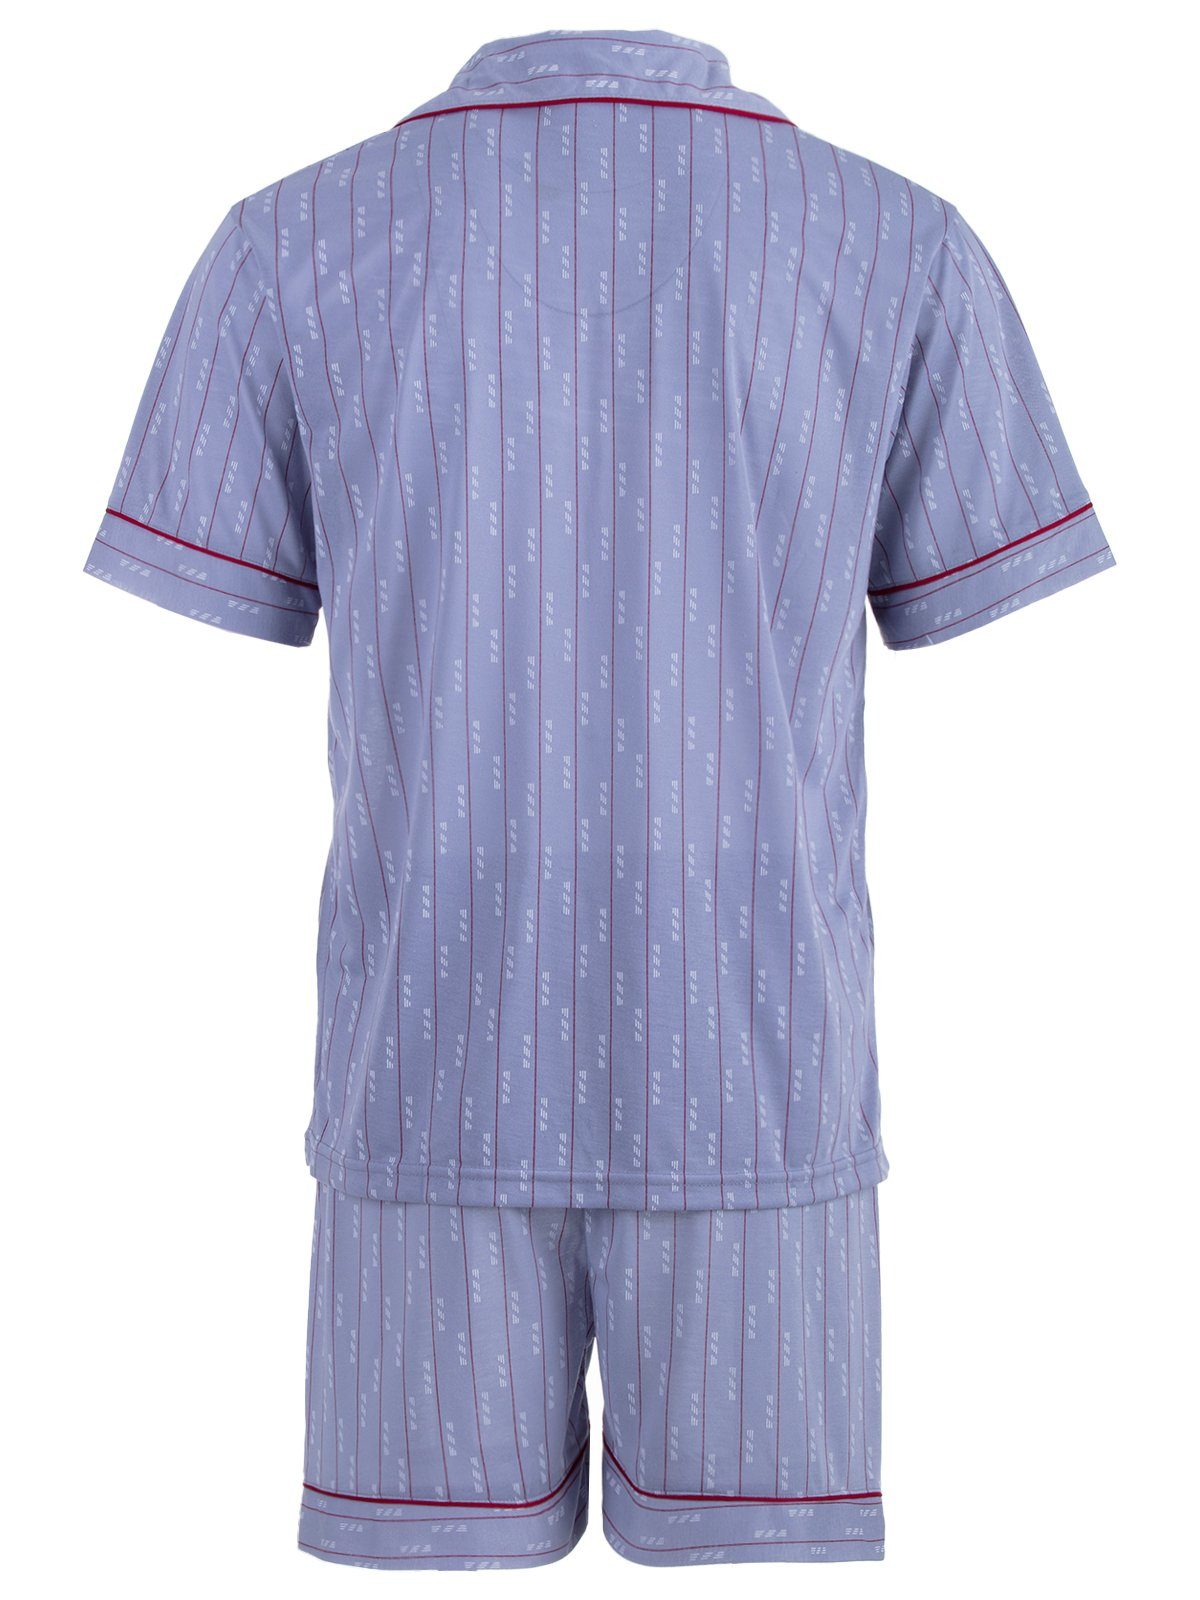 Bordüre Pyjama Schlafanzug - Lucky Shorty Set grau